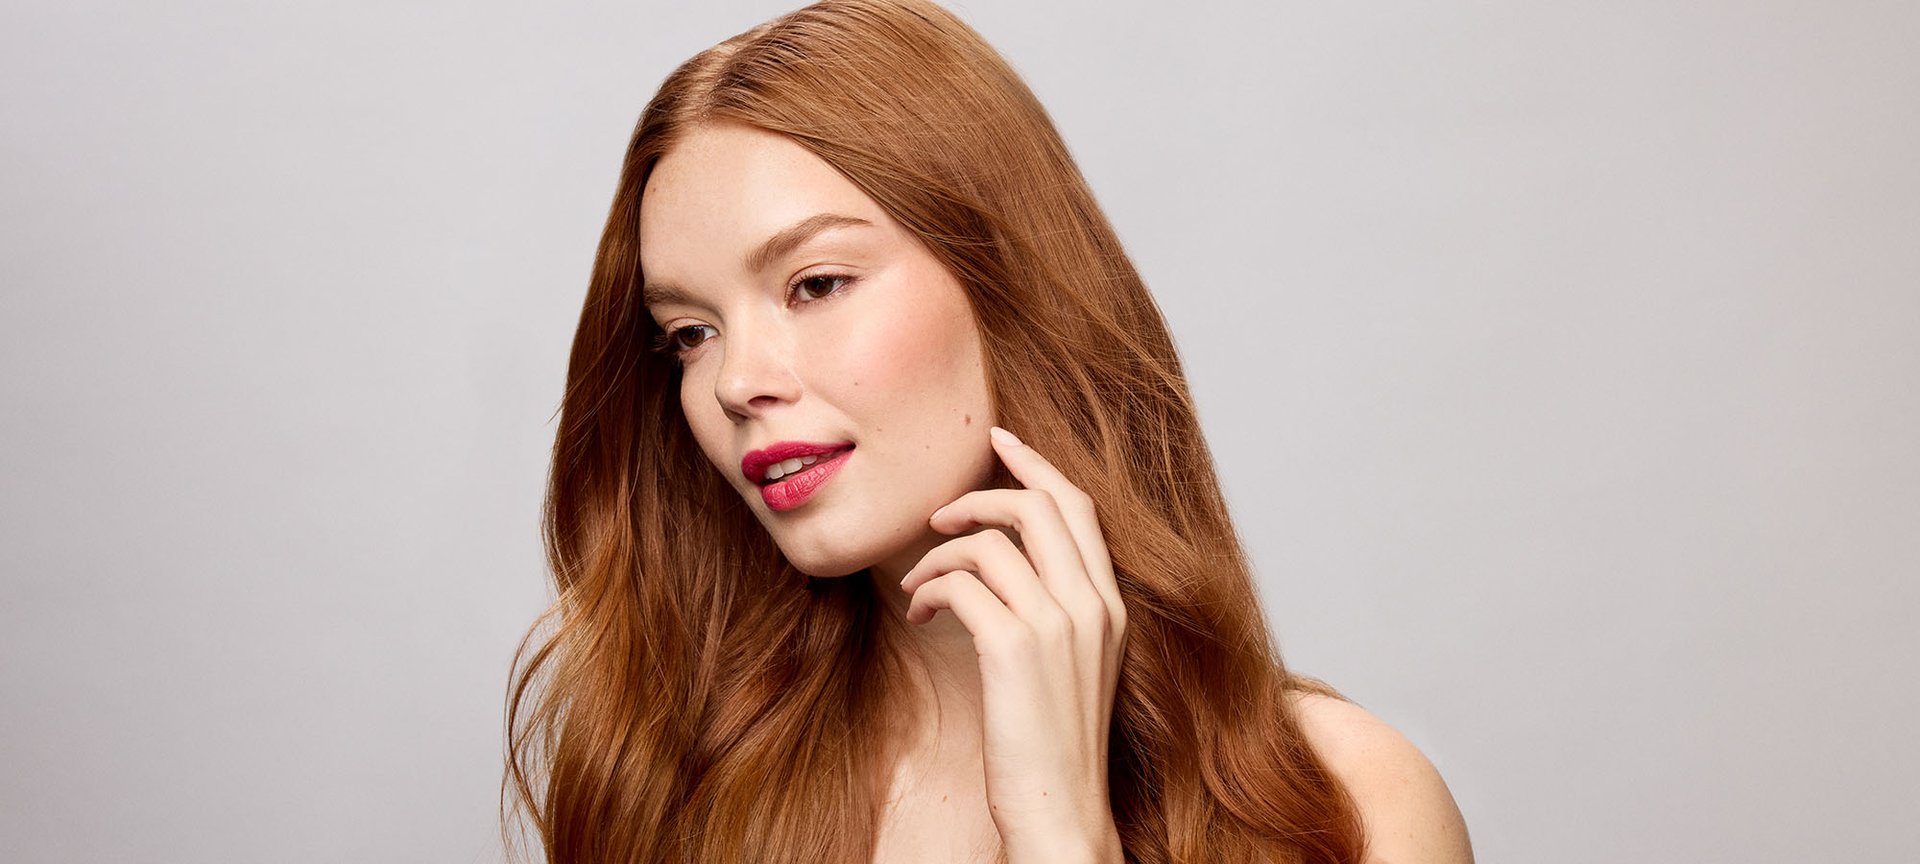 8 Lipsticks to Make Your Teeth Look Whiter - L'Oréal Paris